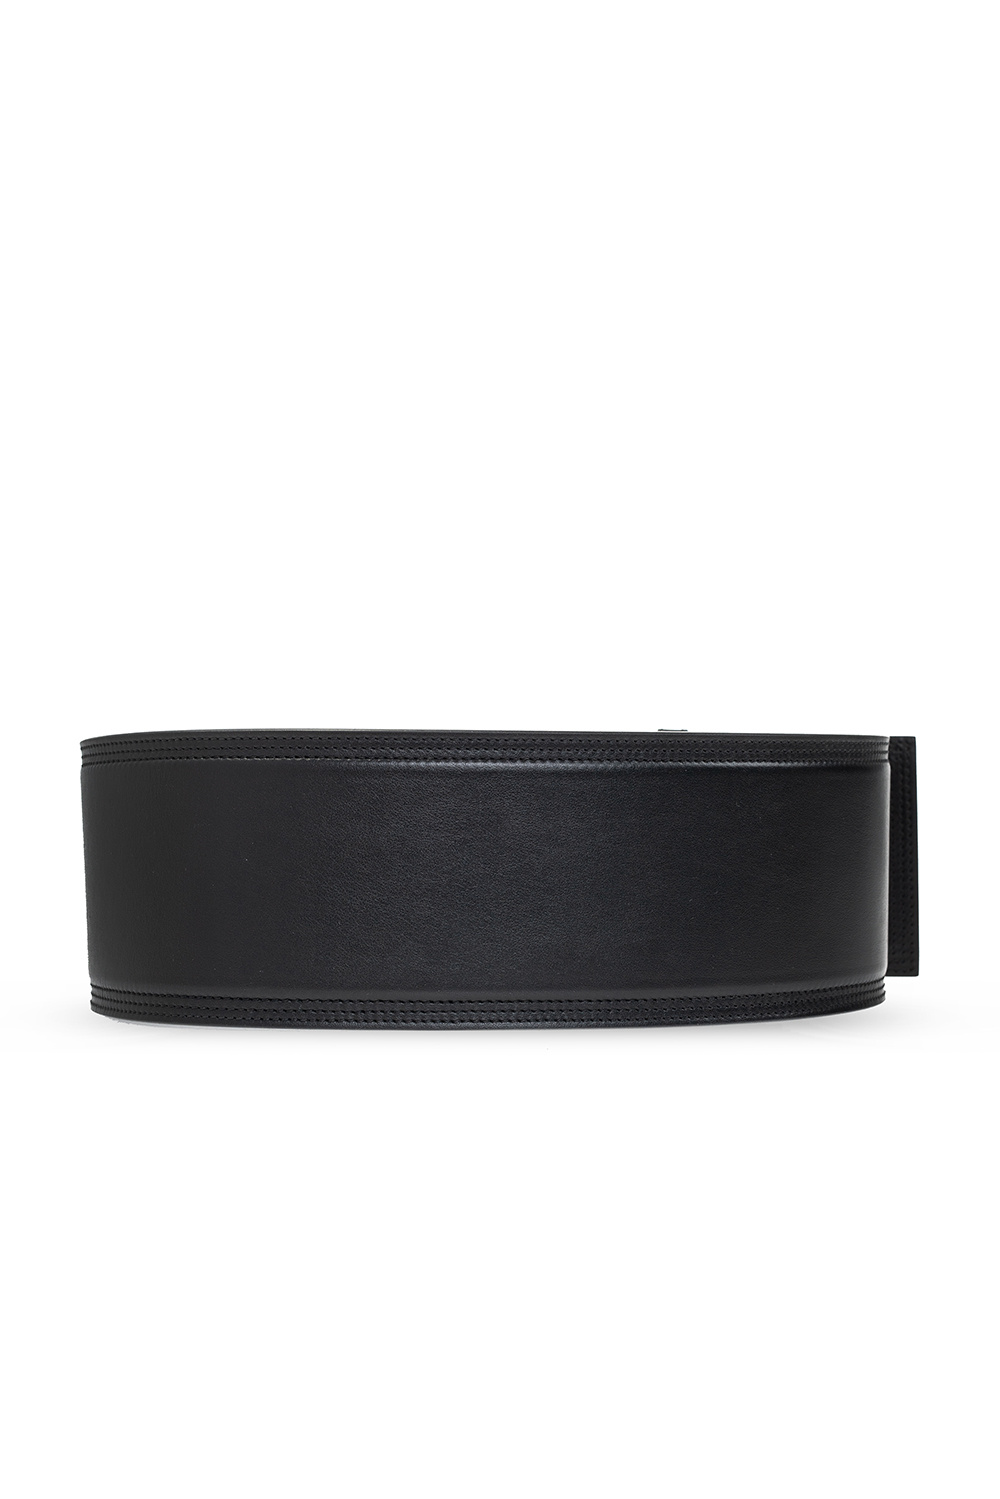 Jacquemus ‘Pichoto’ leather belt